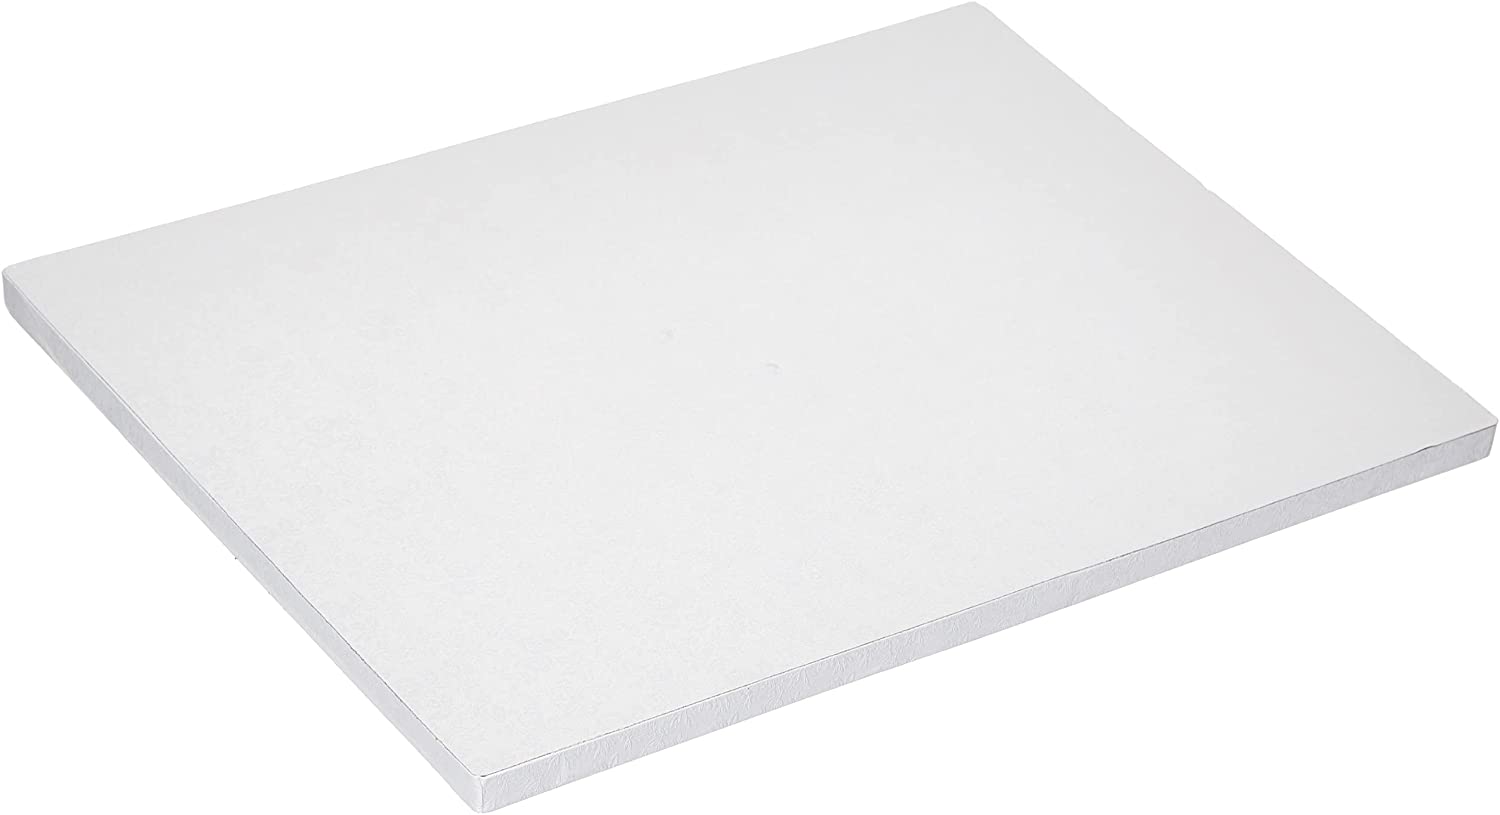 Städter 900042 Cake Board Rectangular Plastic White 40 x 30 x 2 cm